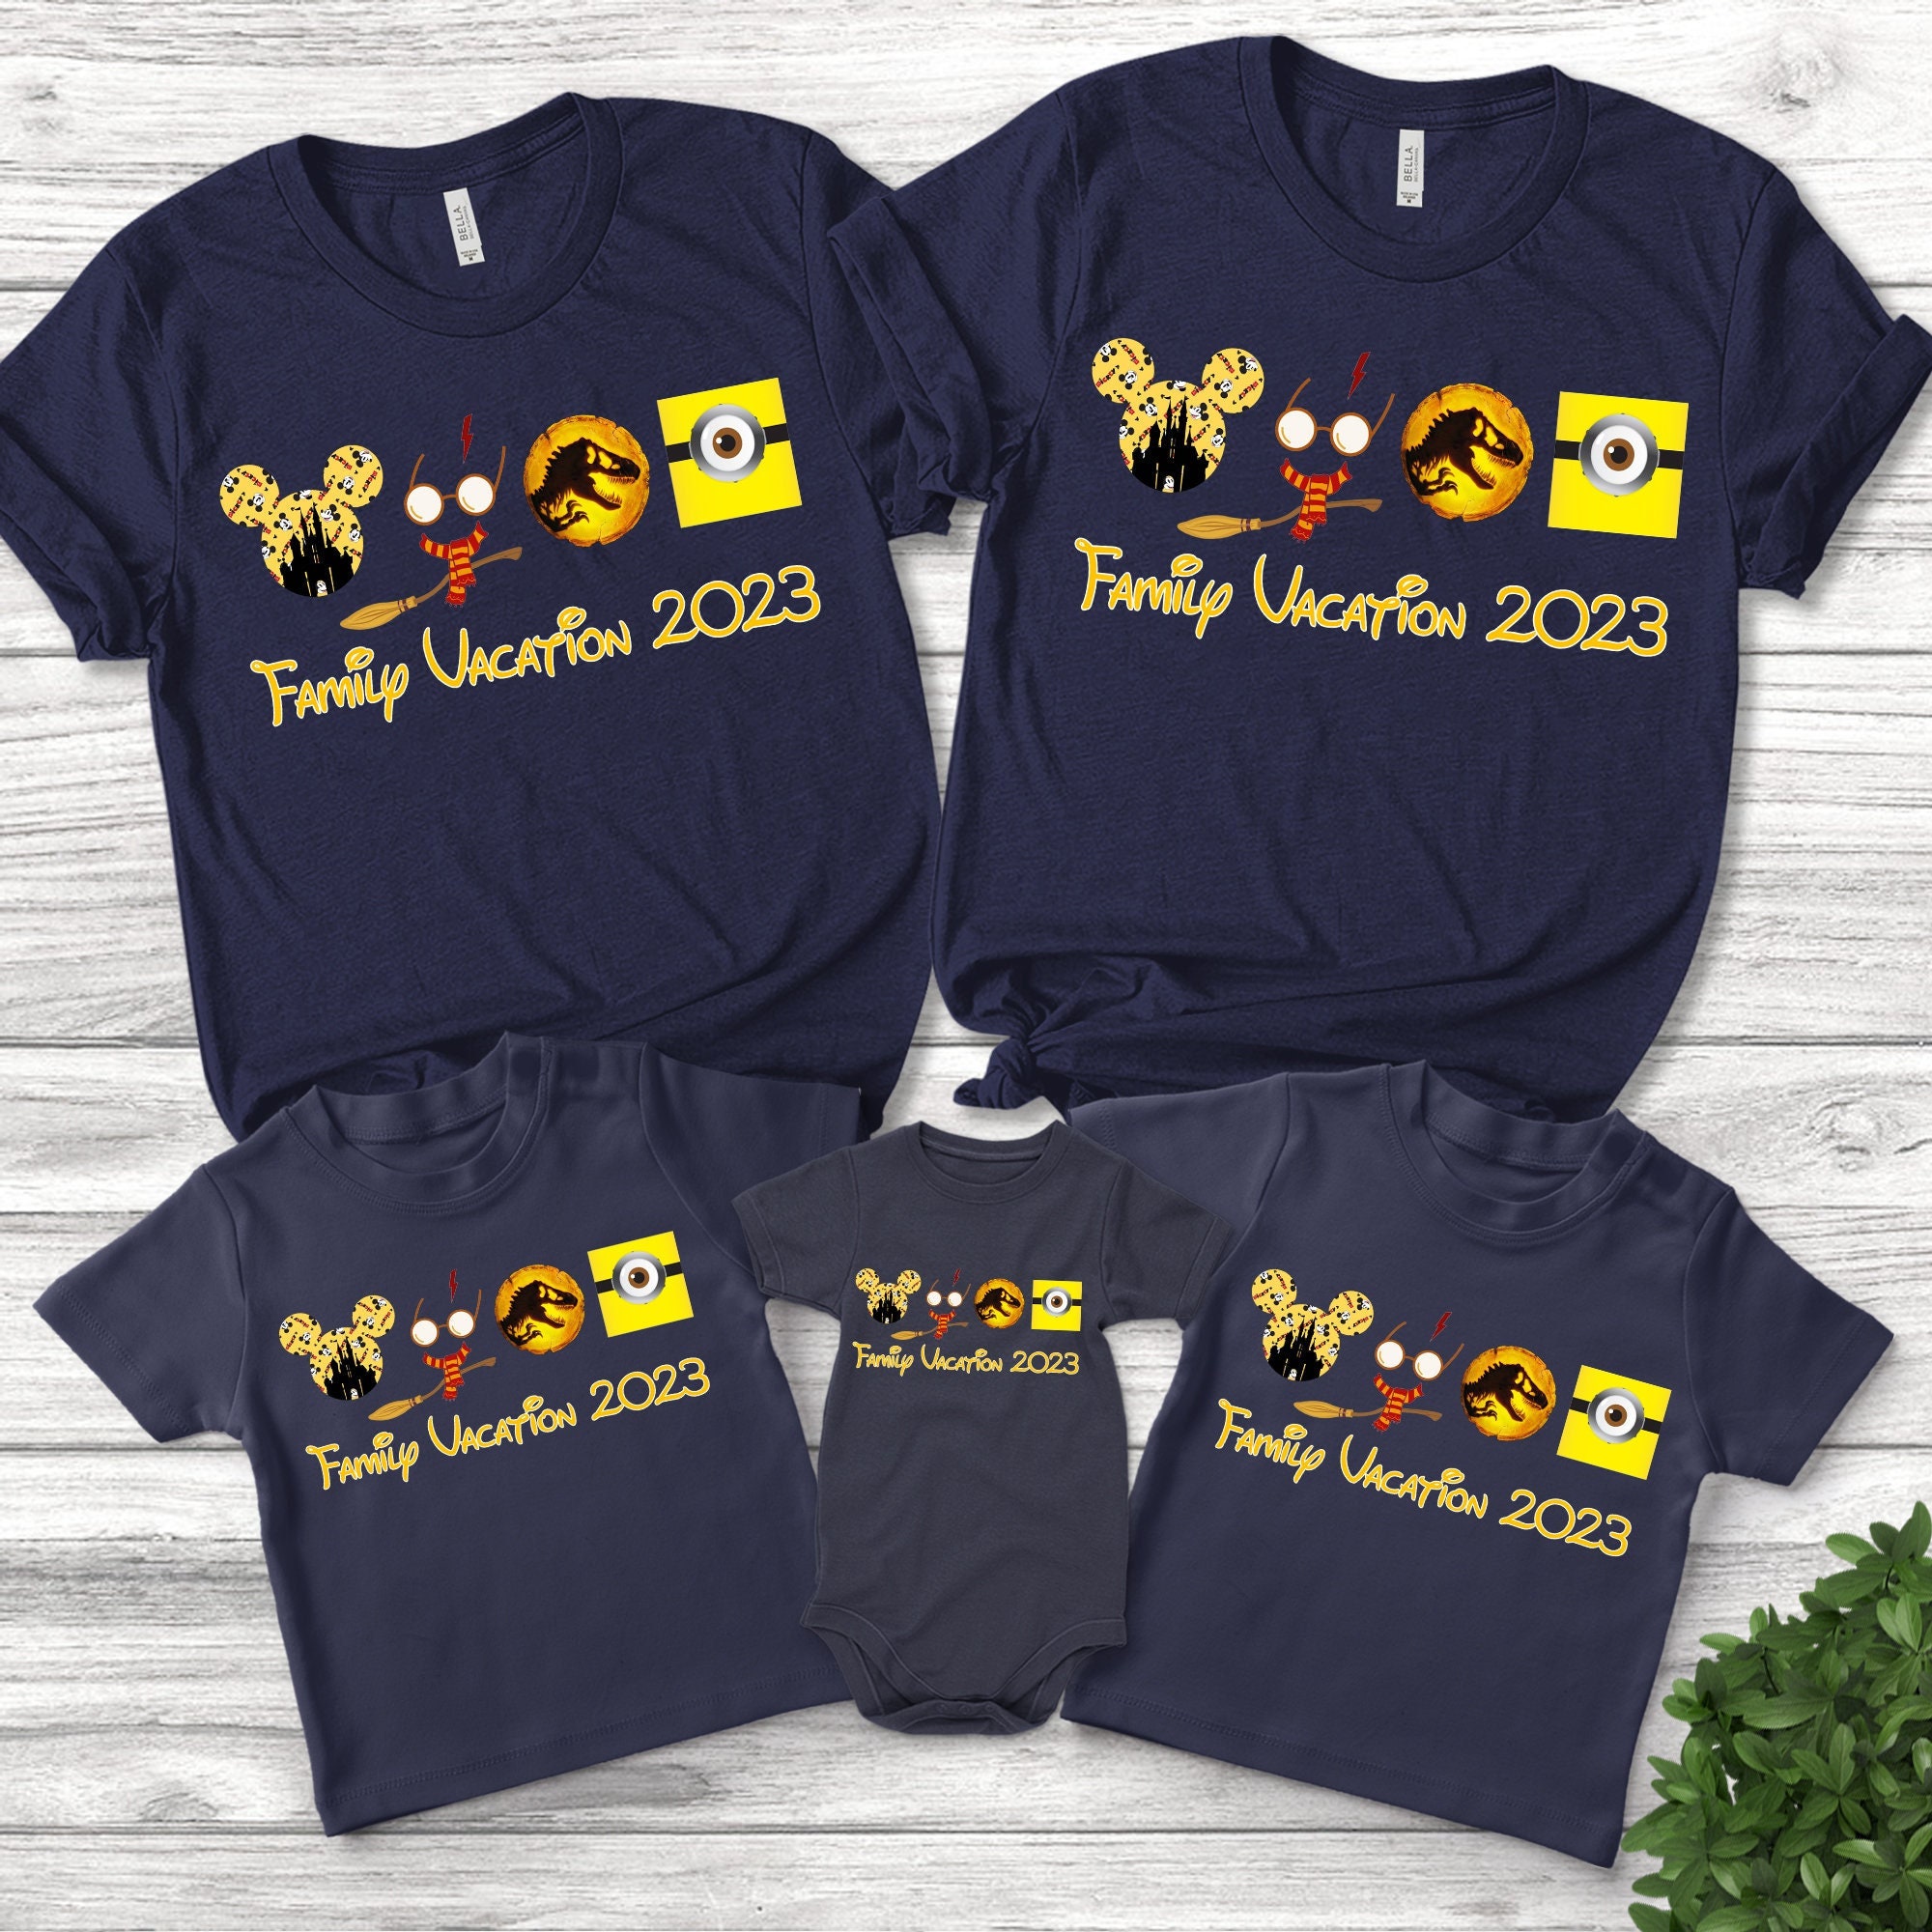 2023 Universal Matching Family Vacation Shirts, Disneyworld, theme park